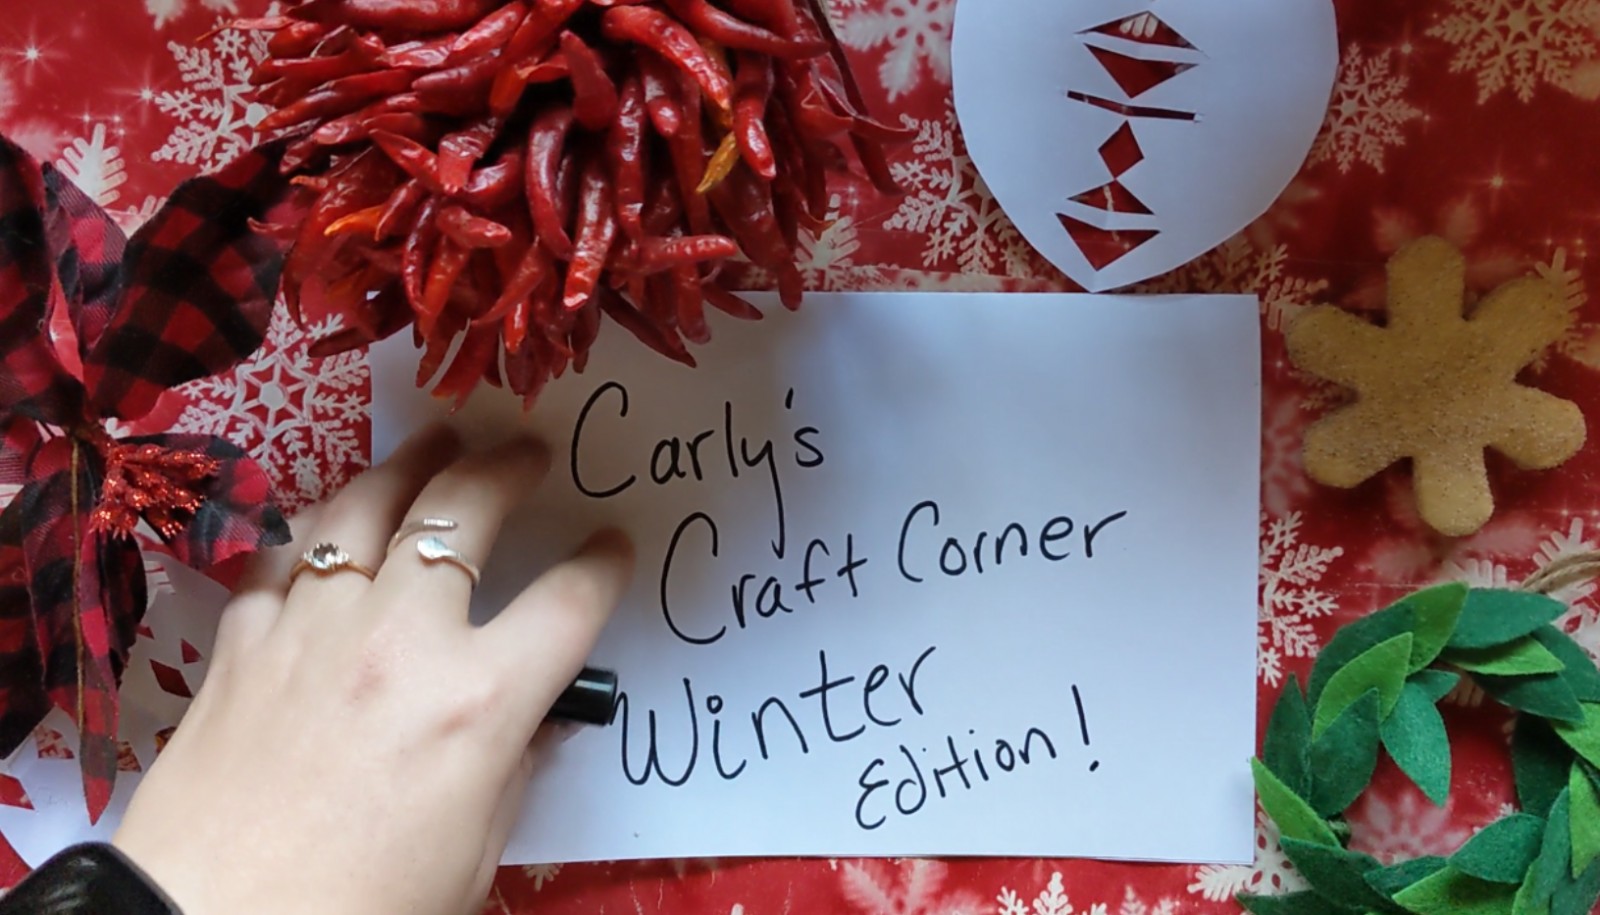 Carly’s Craft Corner